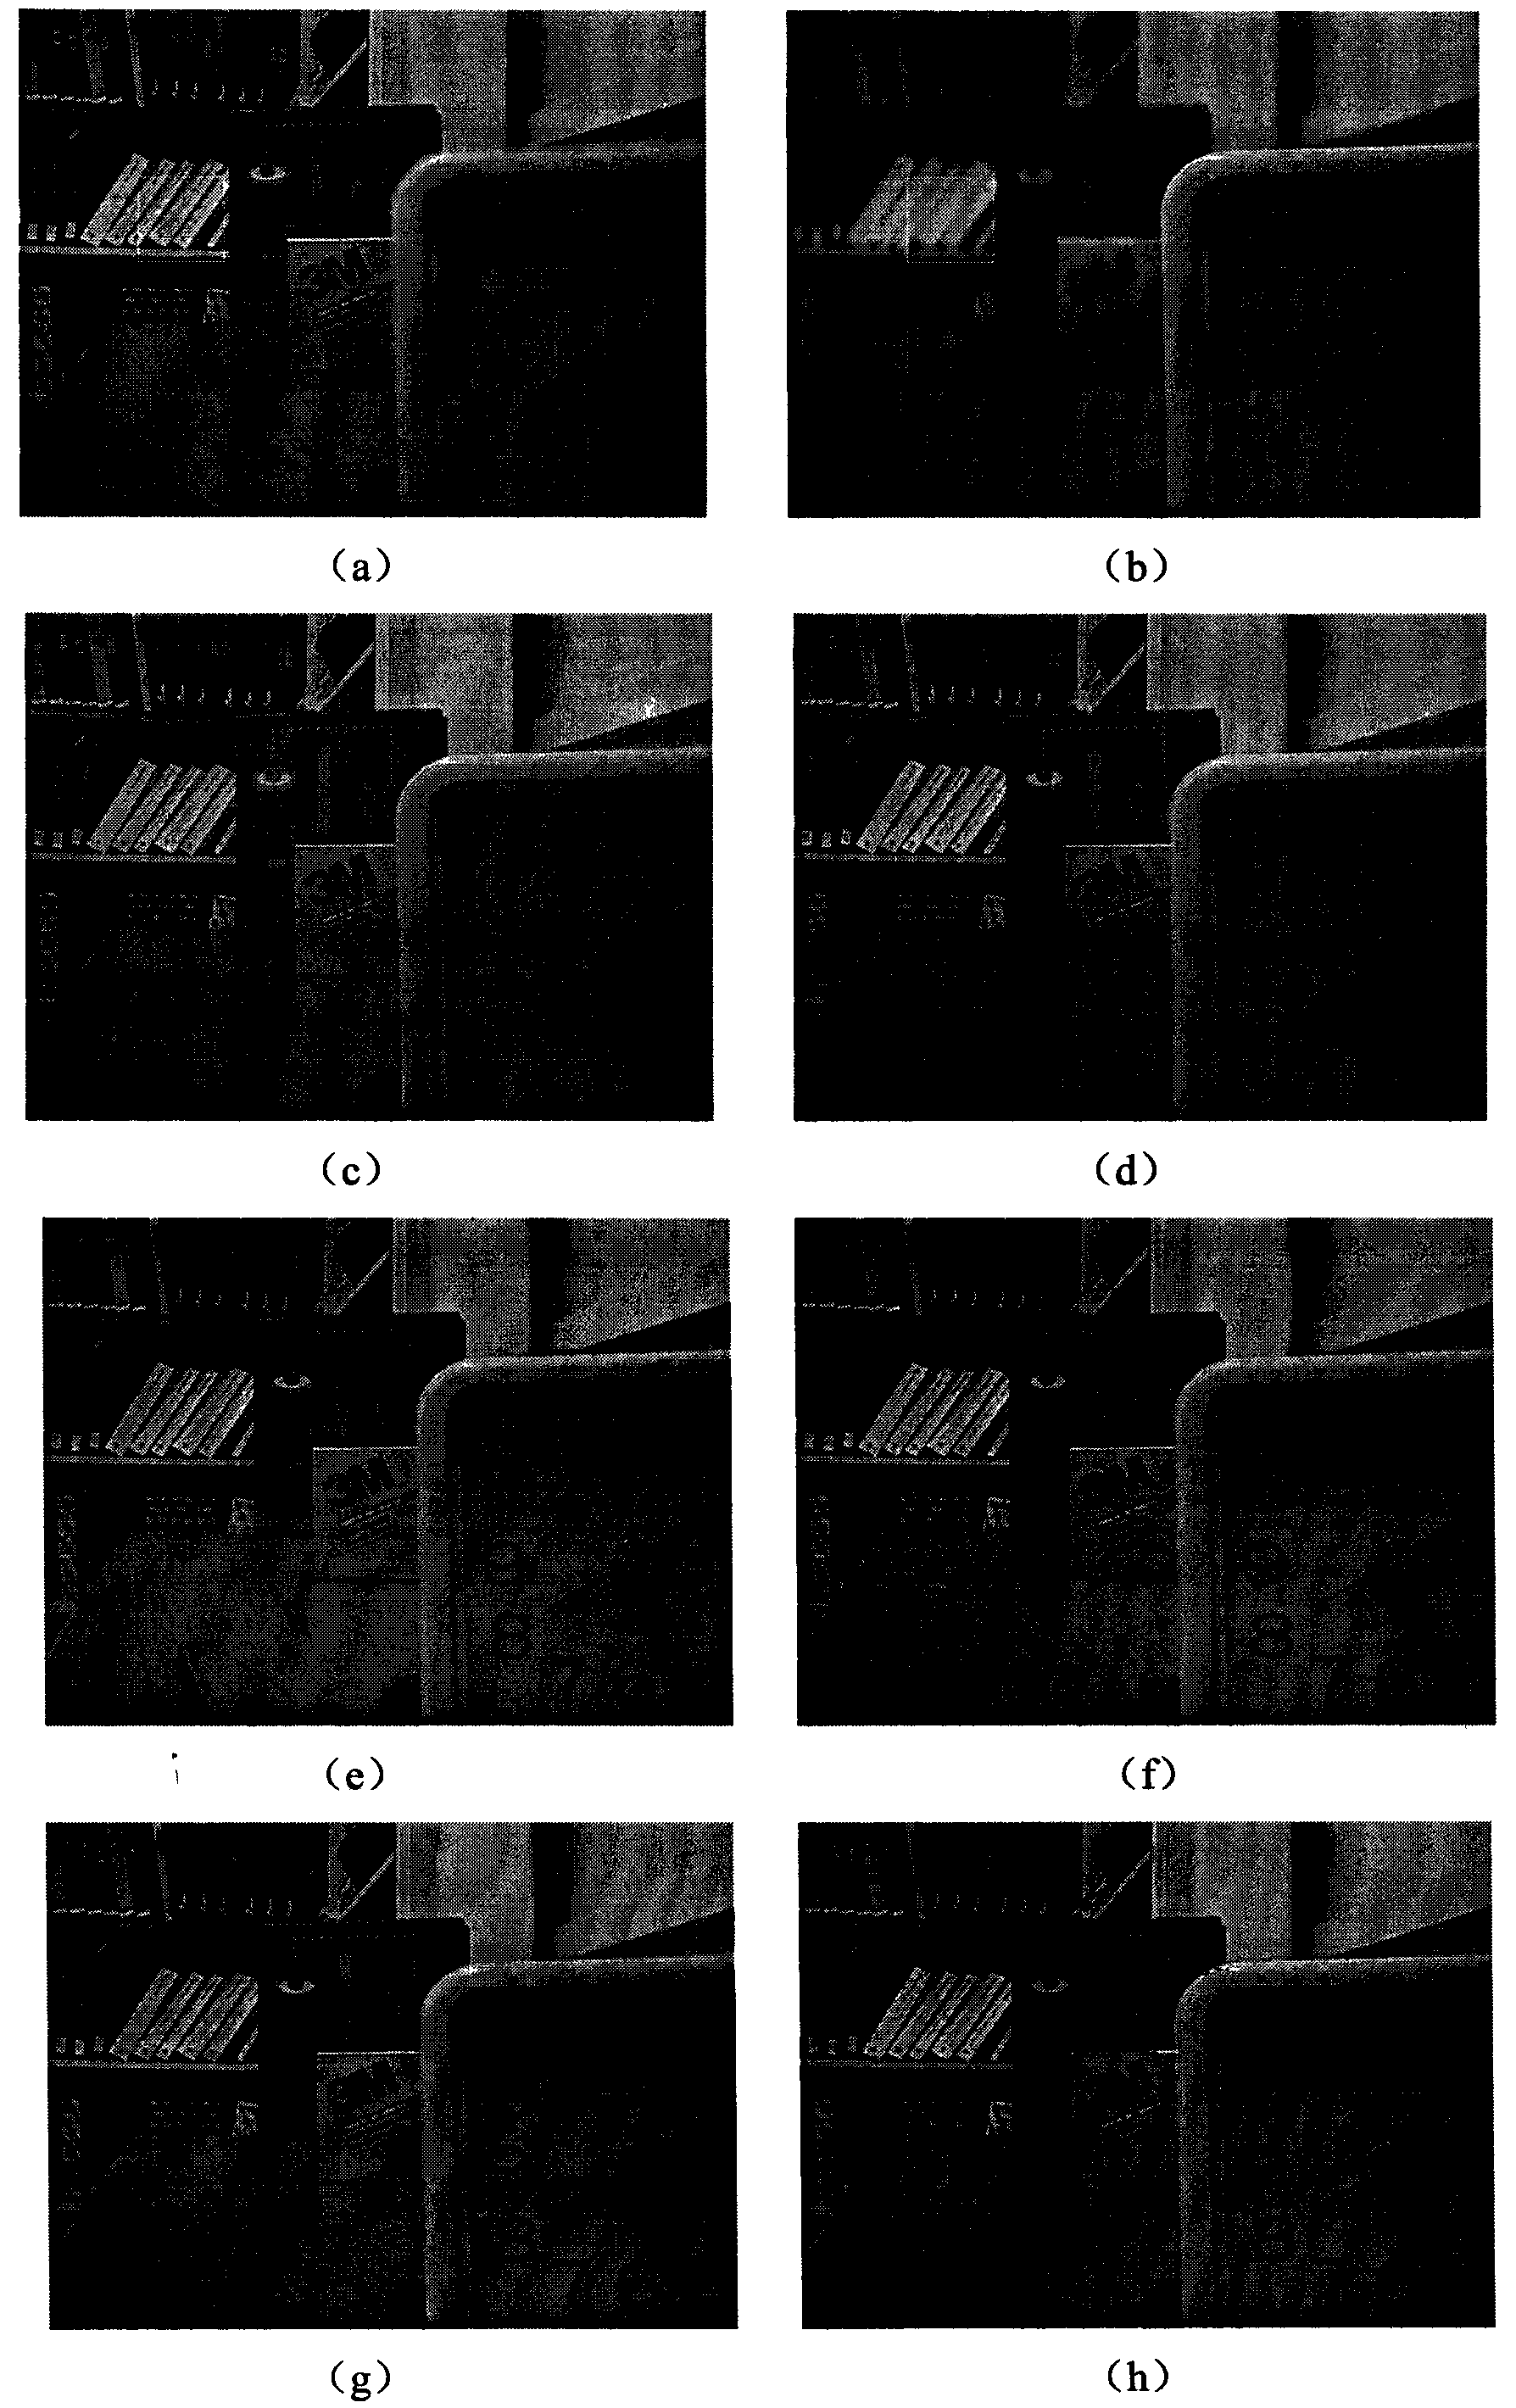 Multi-focusing image fusion method utilizing core Fisher classification and redundant wavelet transformation